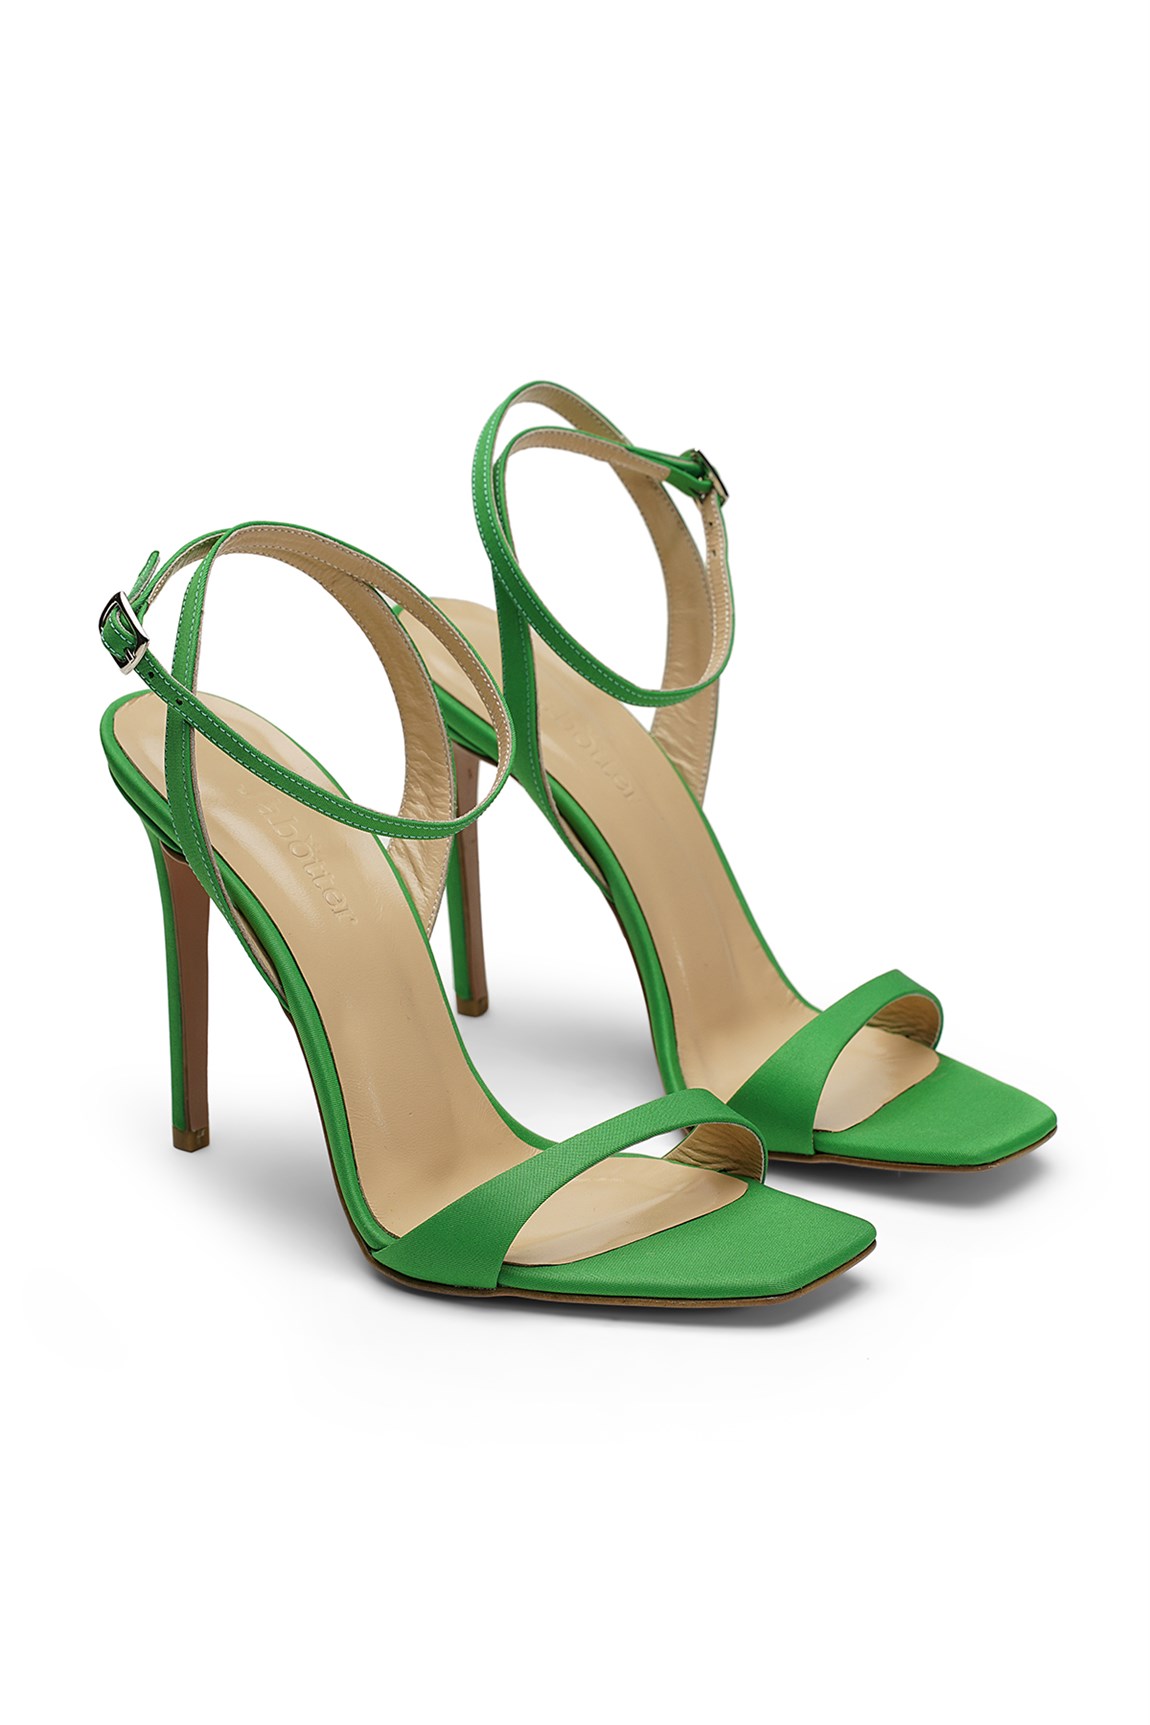 Jabotter Lesley Yeşil Saten İnce Topuklu Ayakkabı - Jabotter